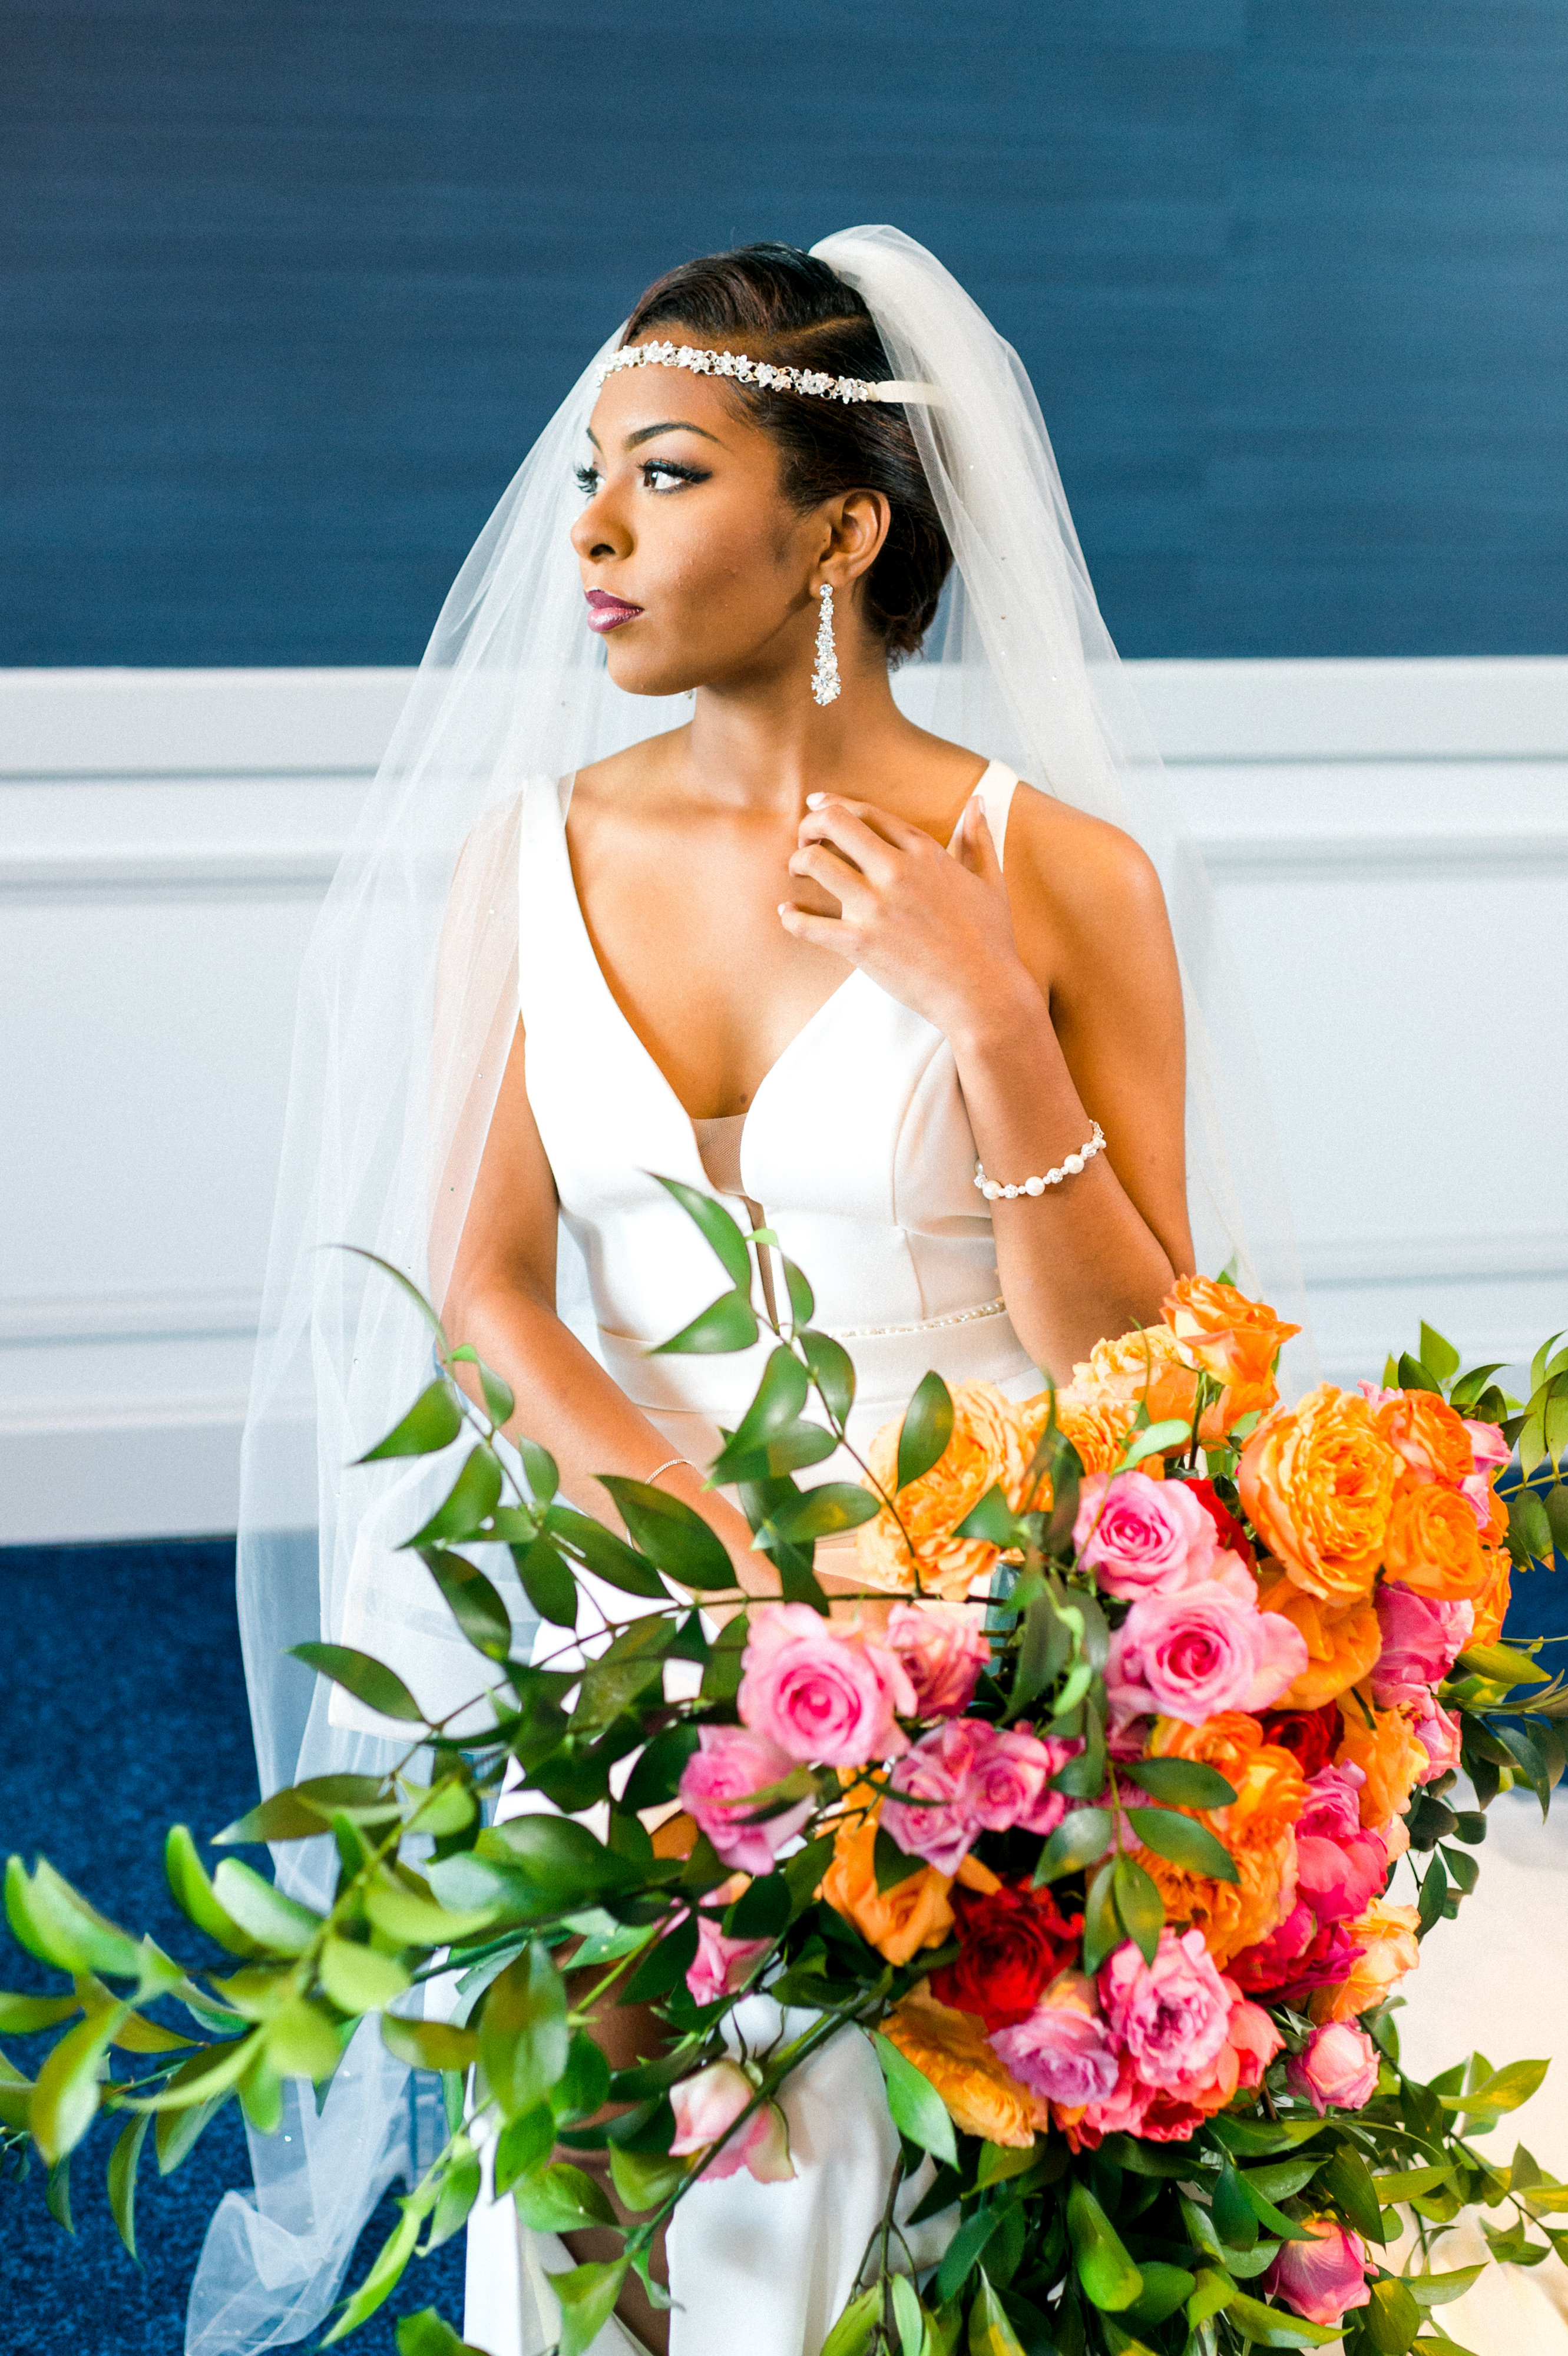 E'MAGNE Events & Co - North Carolina luxury wedding planner - branded logo - orange and navy blue wedding - bride with orange and fuchsia bouquet